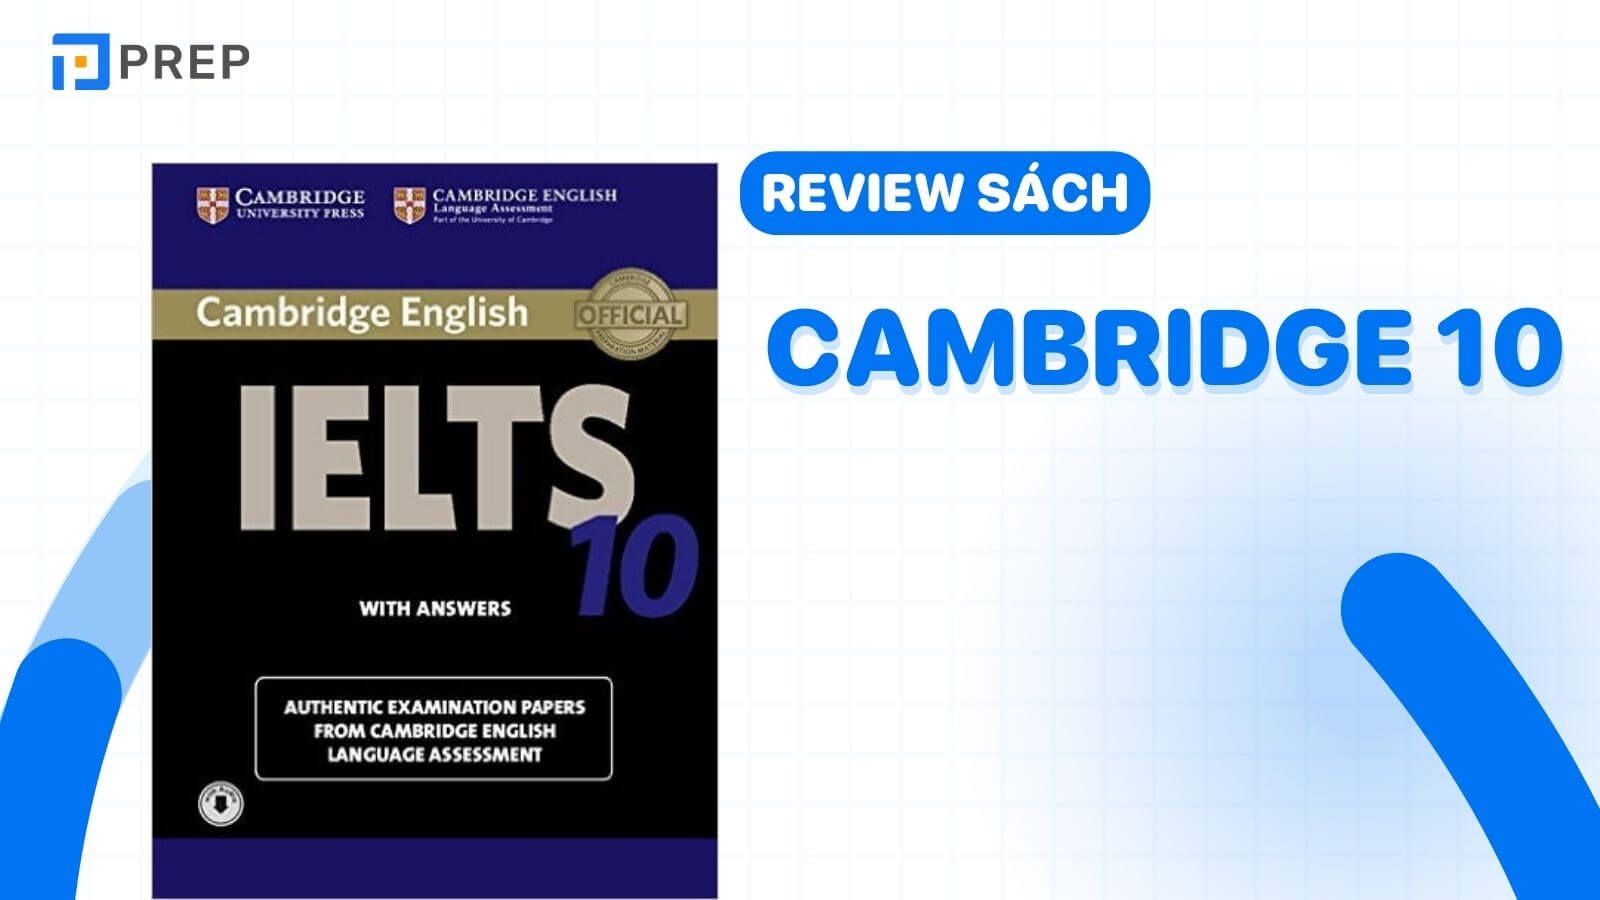 Sách Cambridge 10